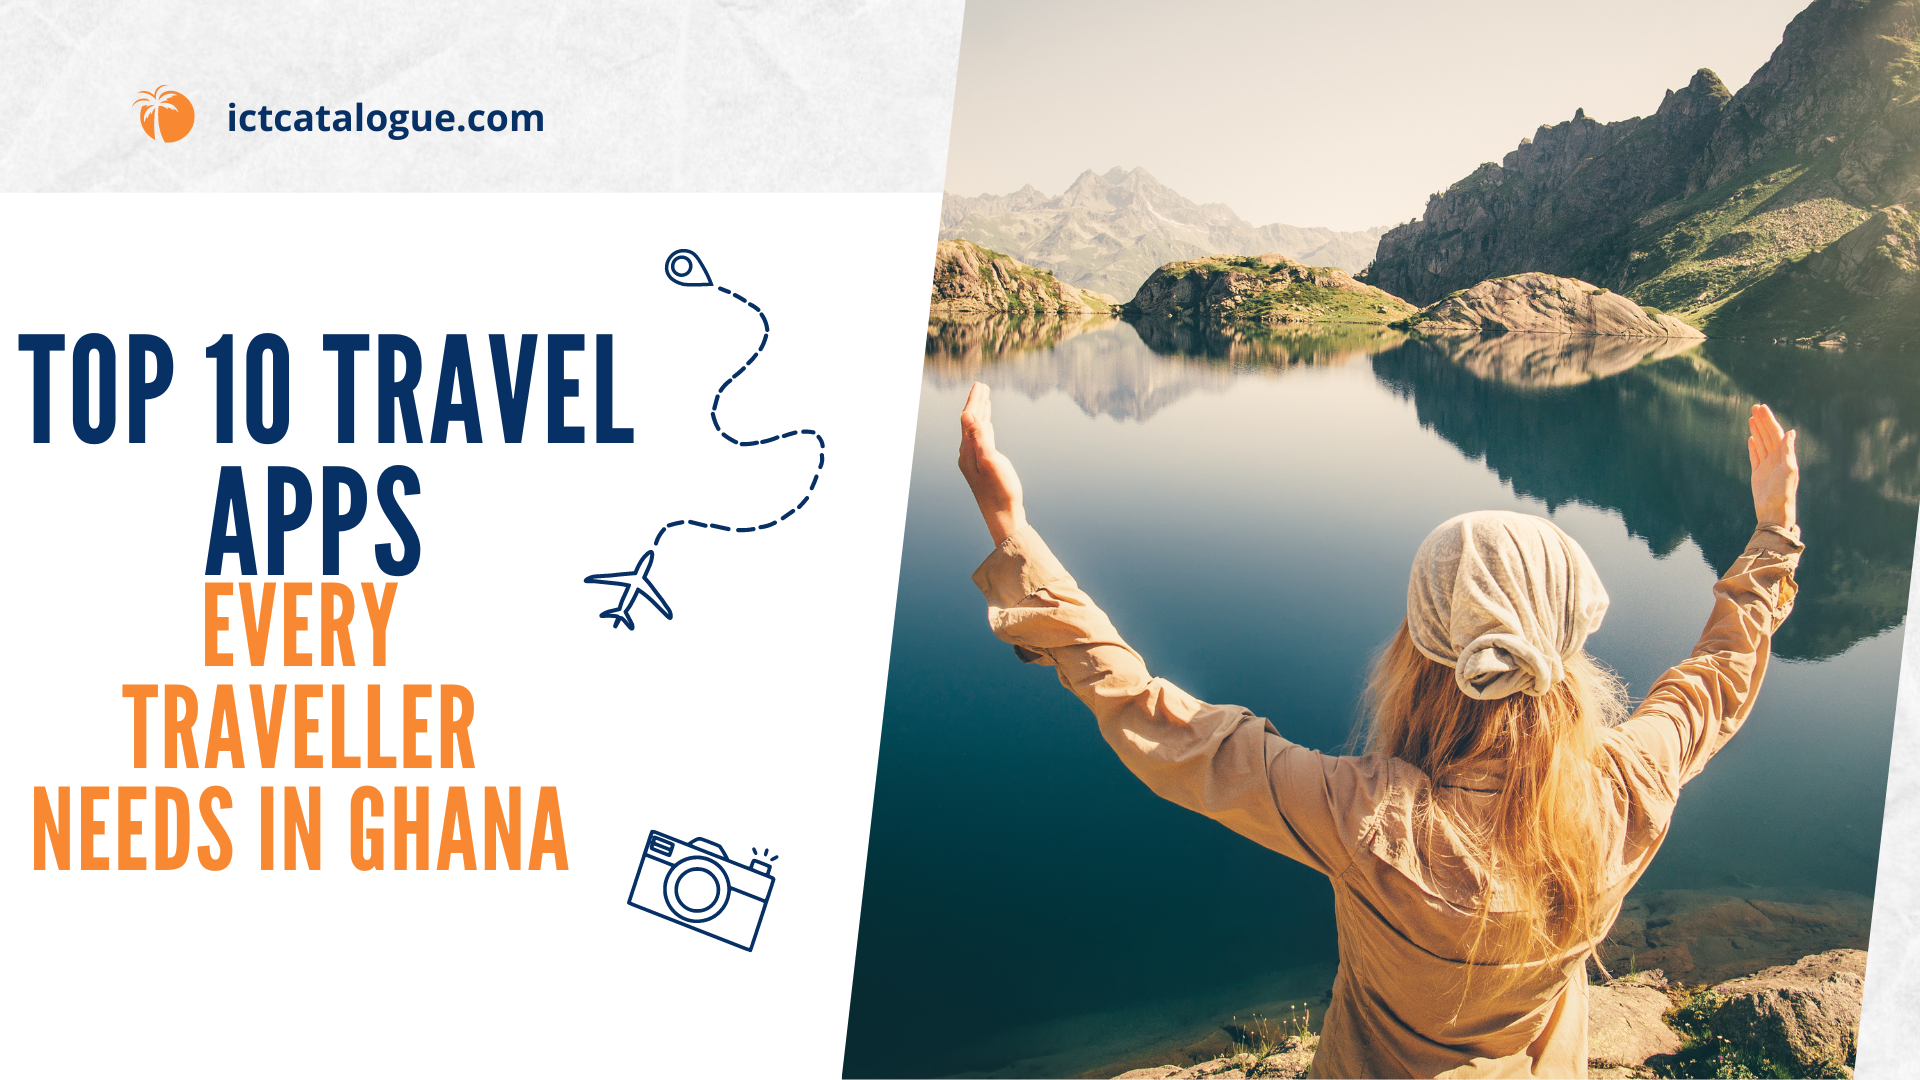 Top 10 Travel Apps Every Traveller Needs In Ghana